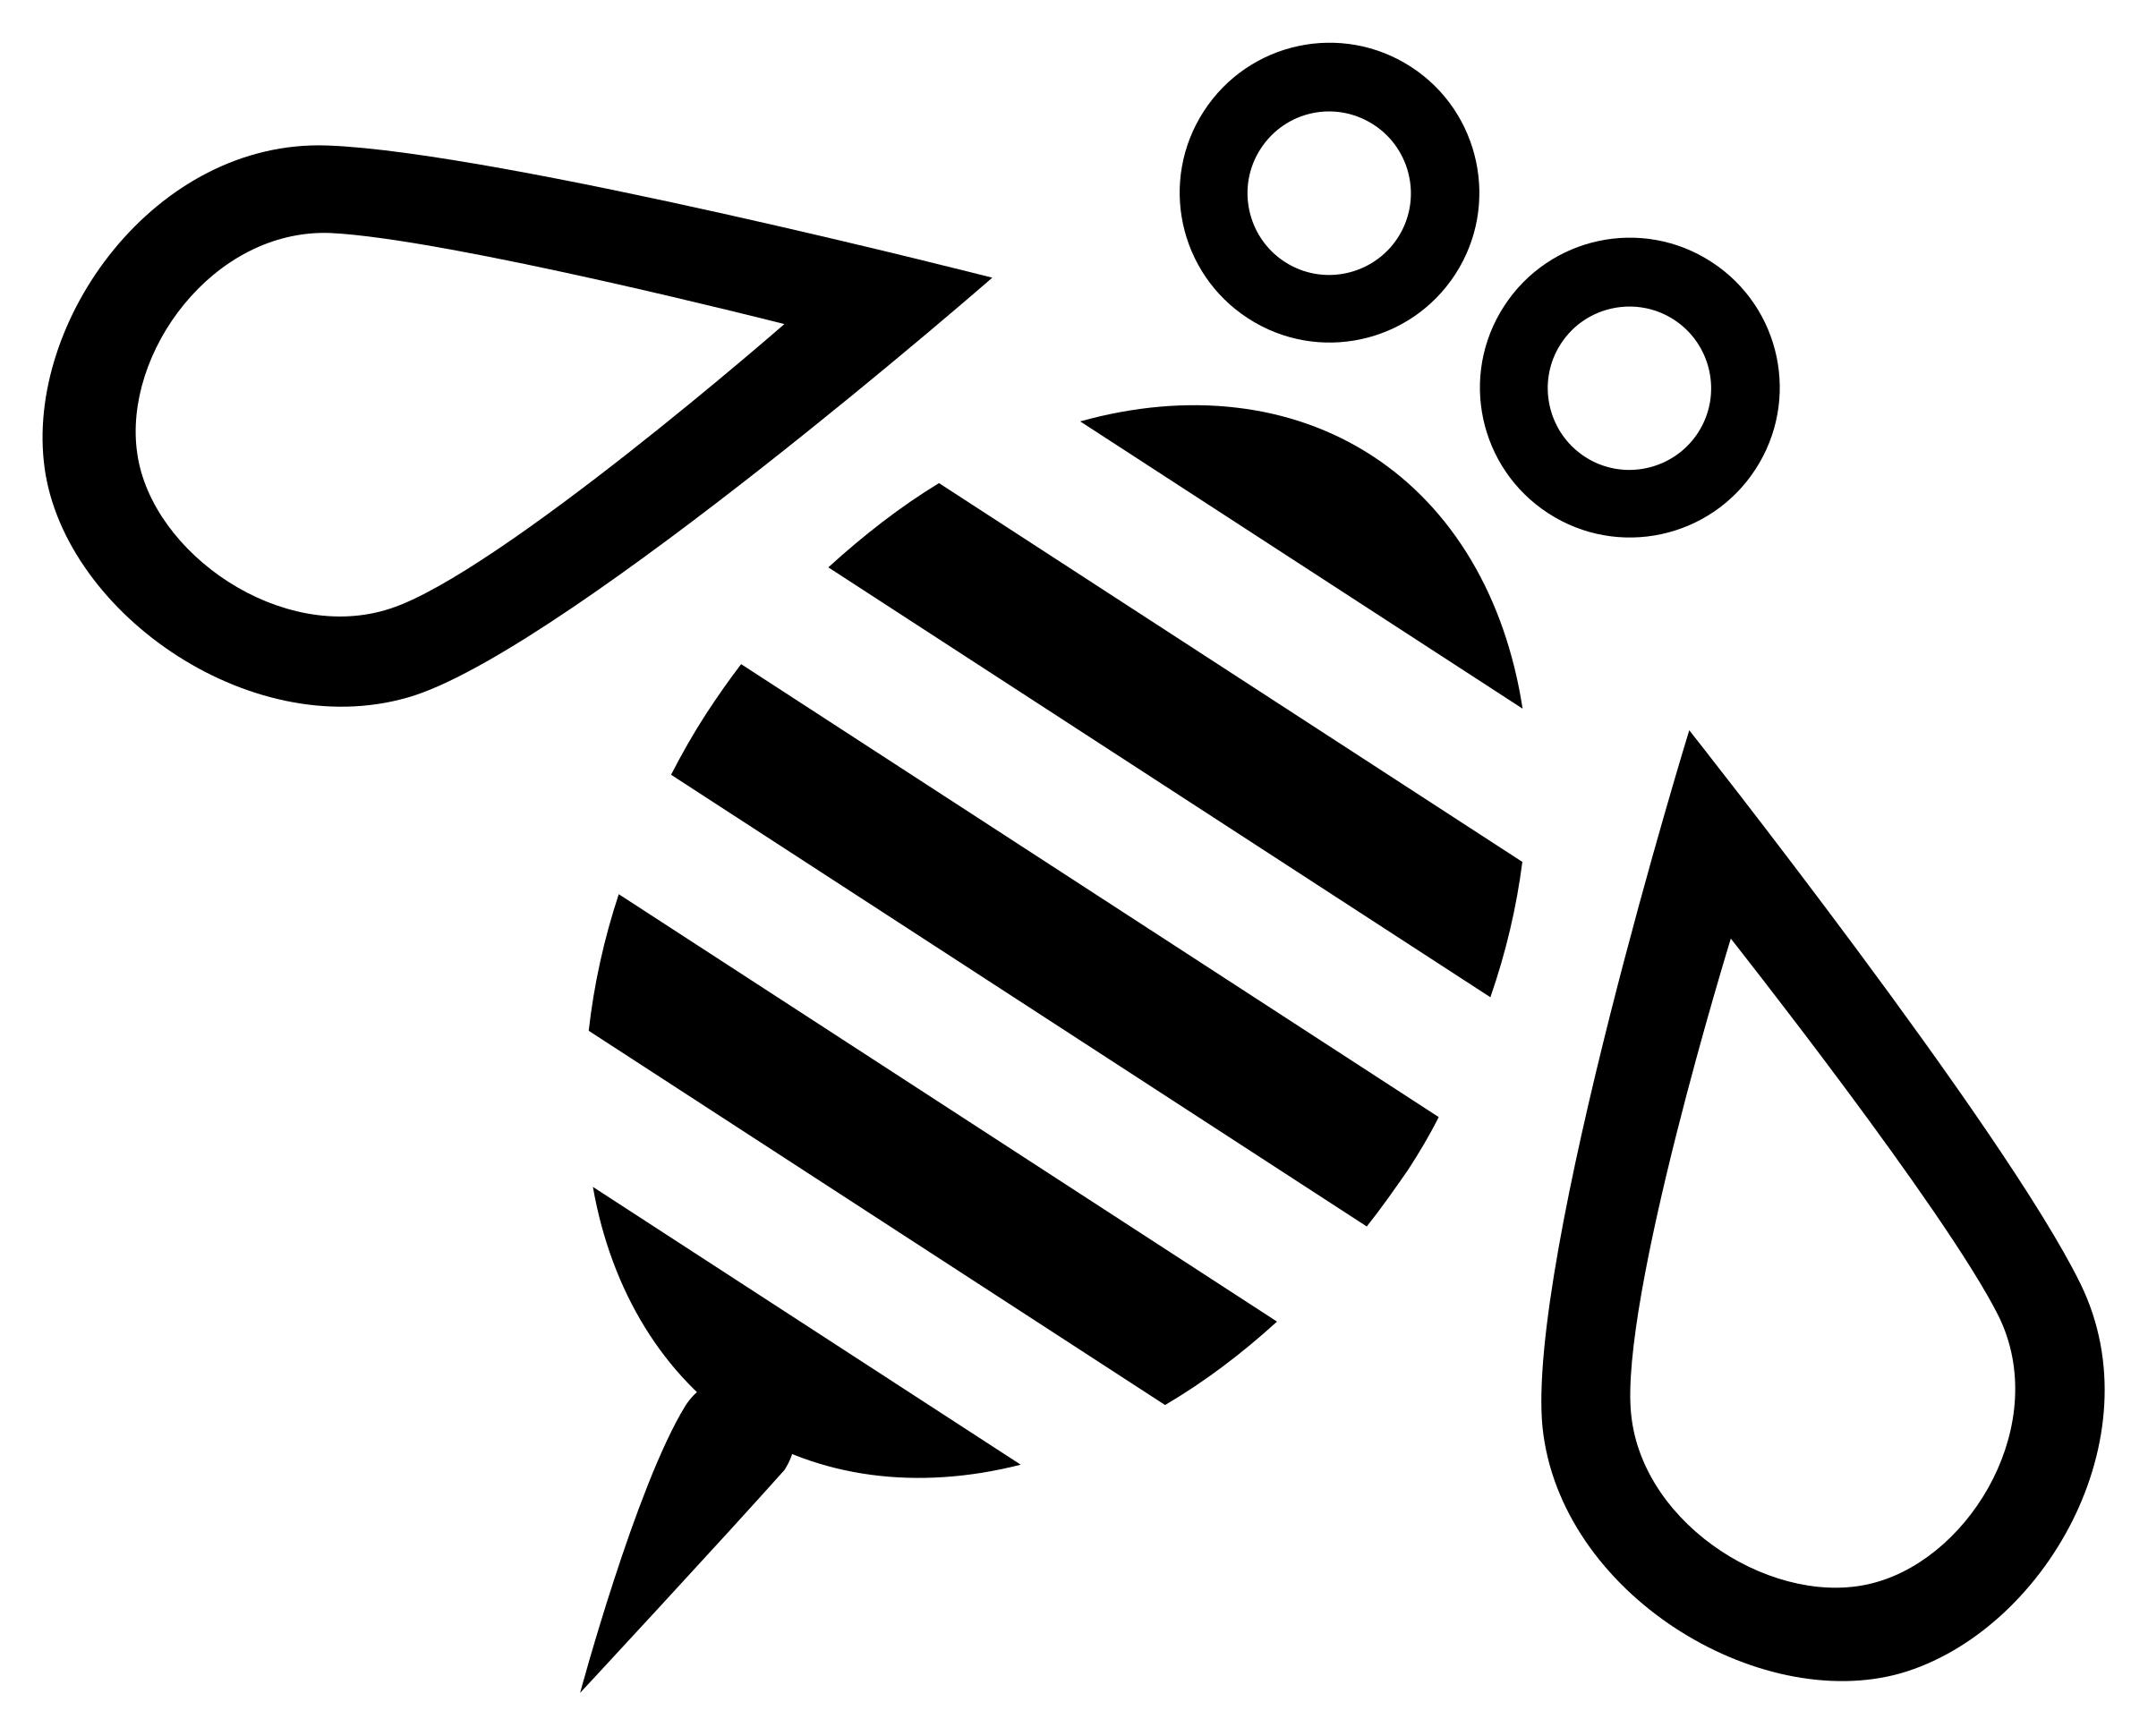 Minimal Bee or Bumblebee Black icons